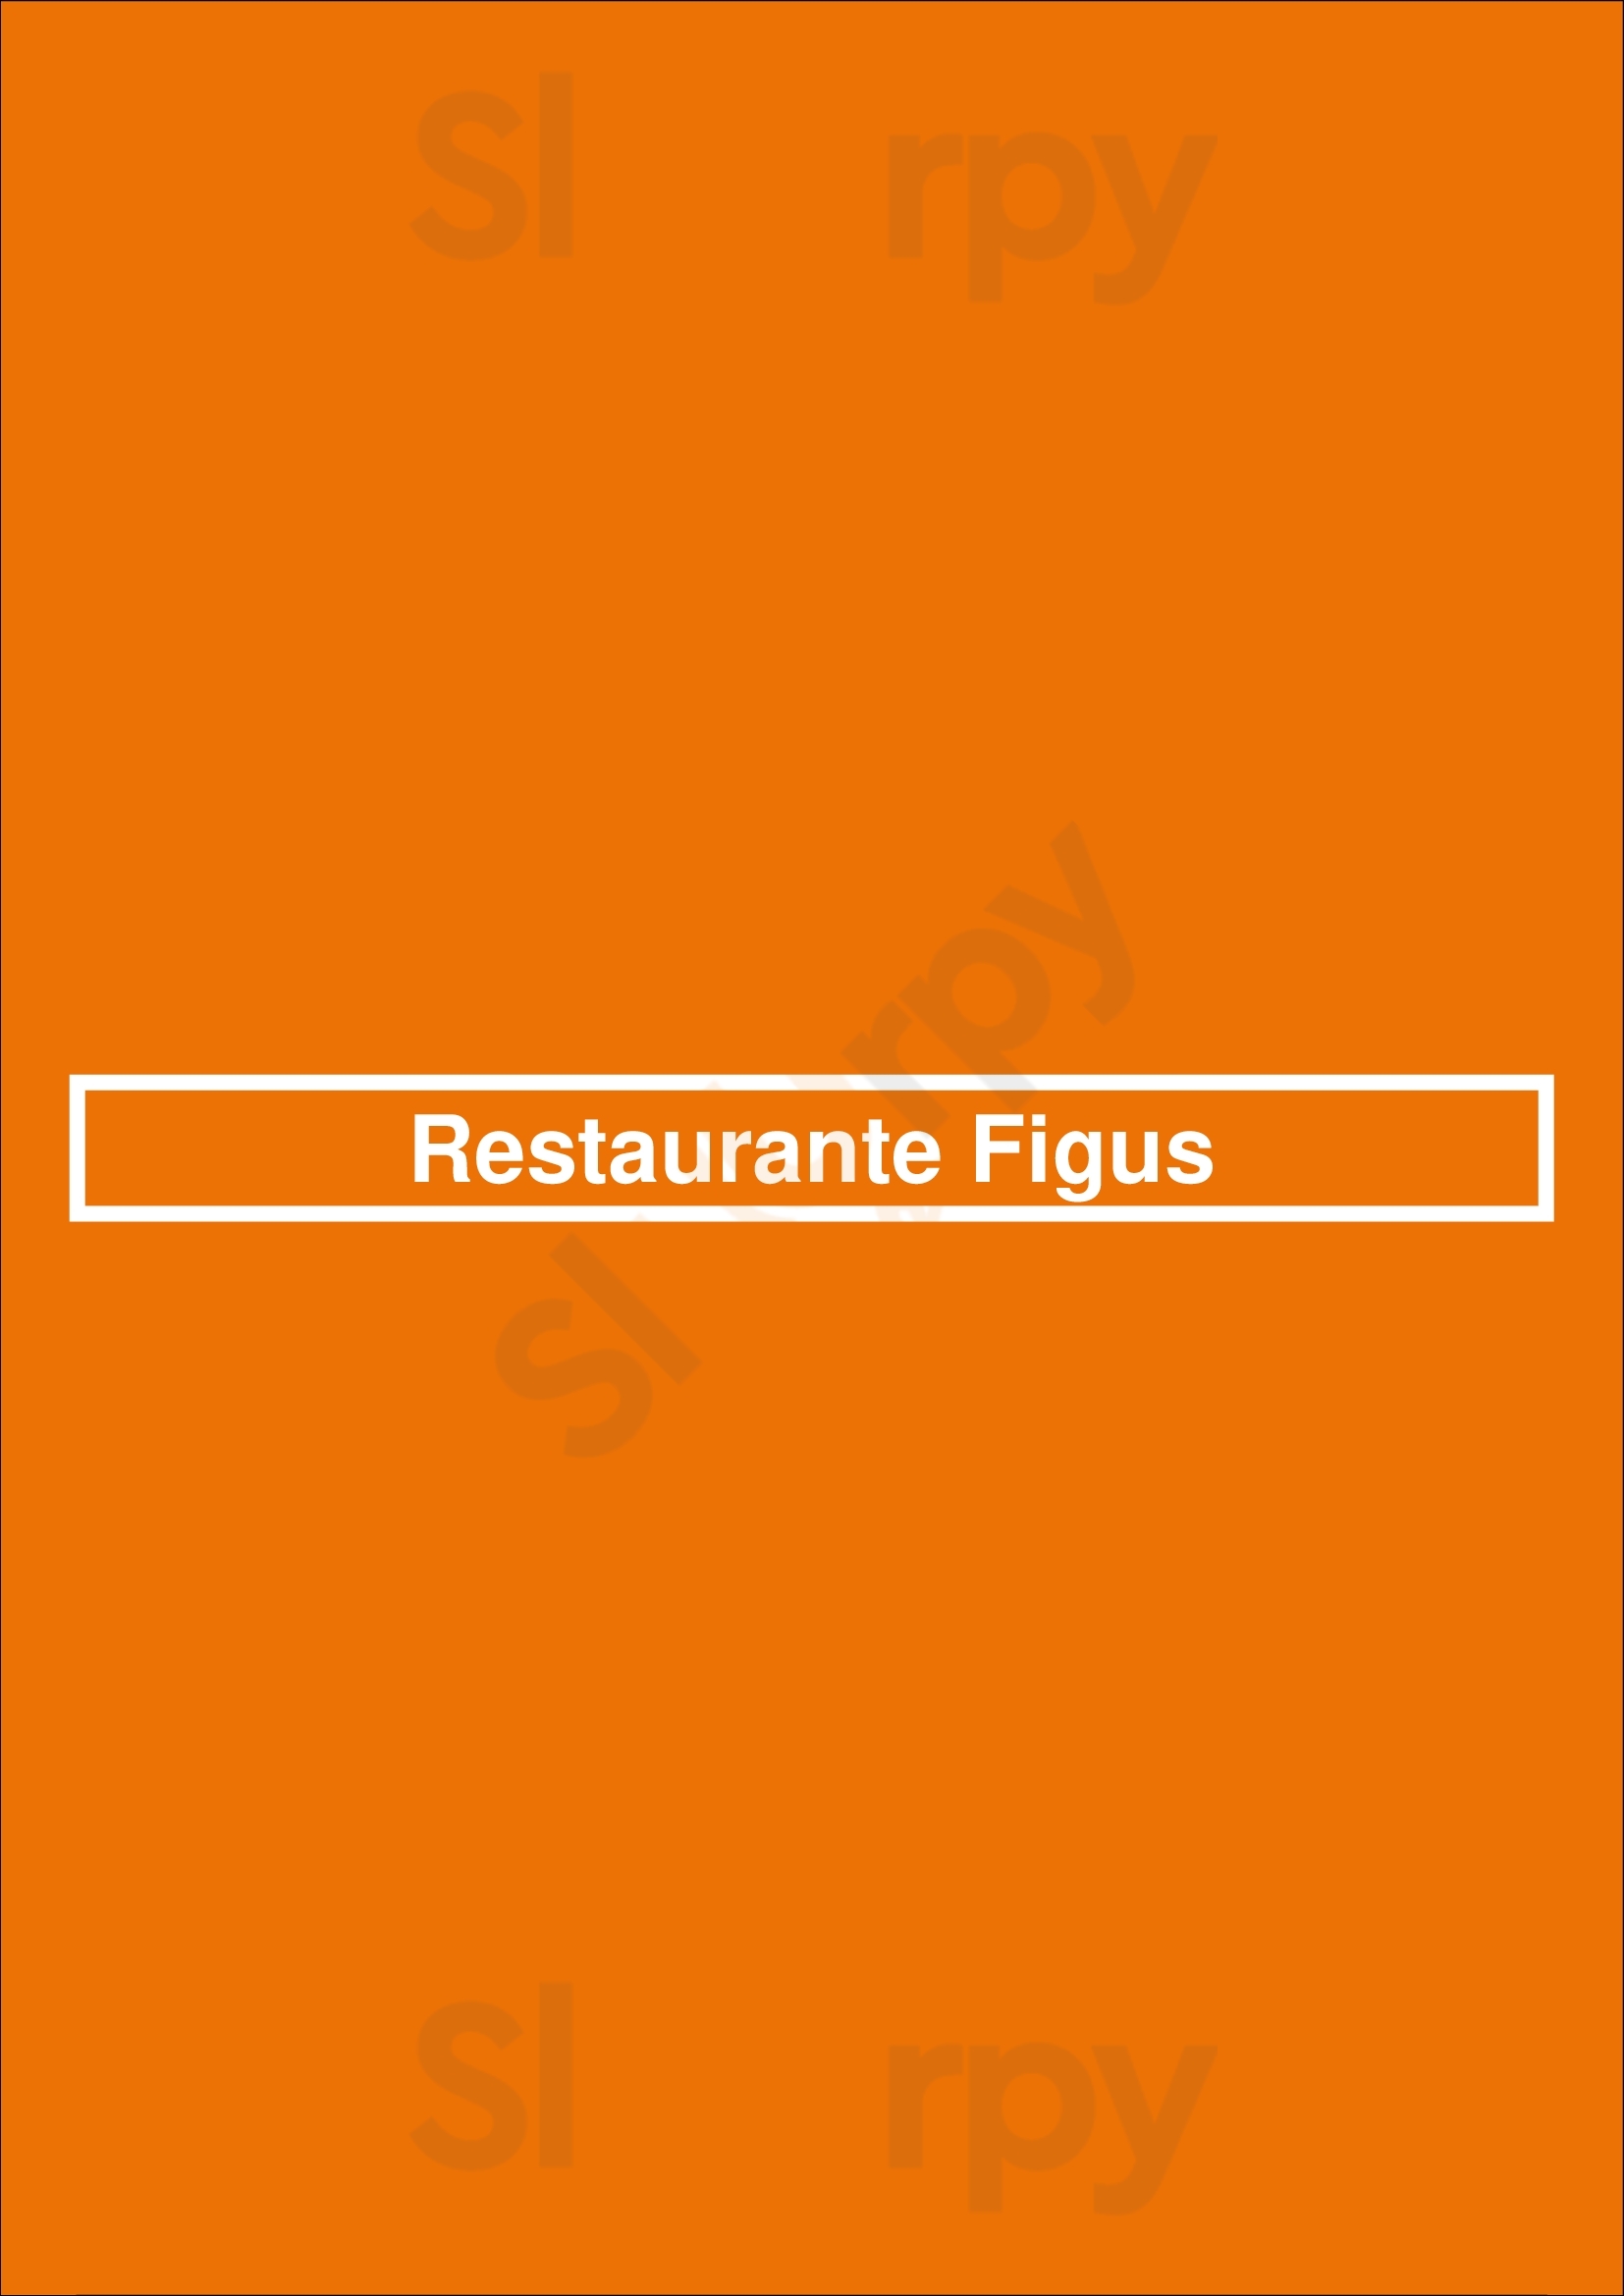 Restaurante Figus Lisboa Menu - 1